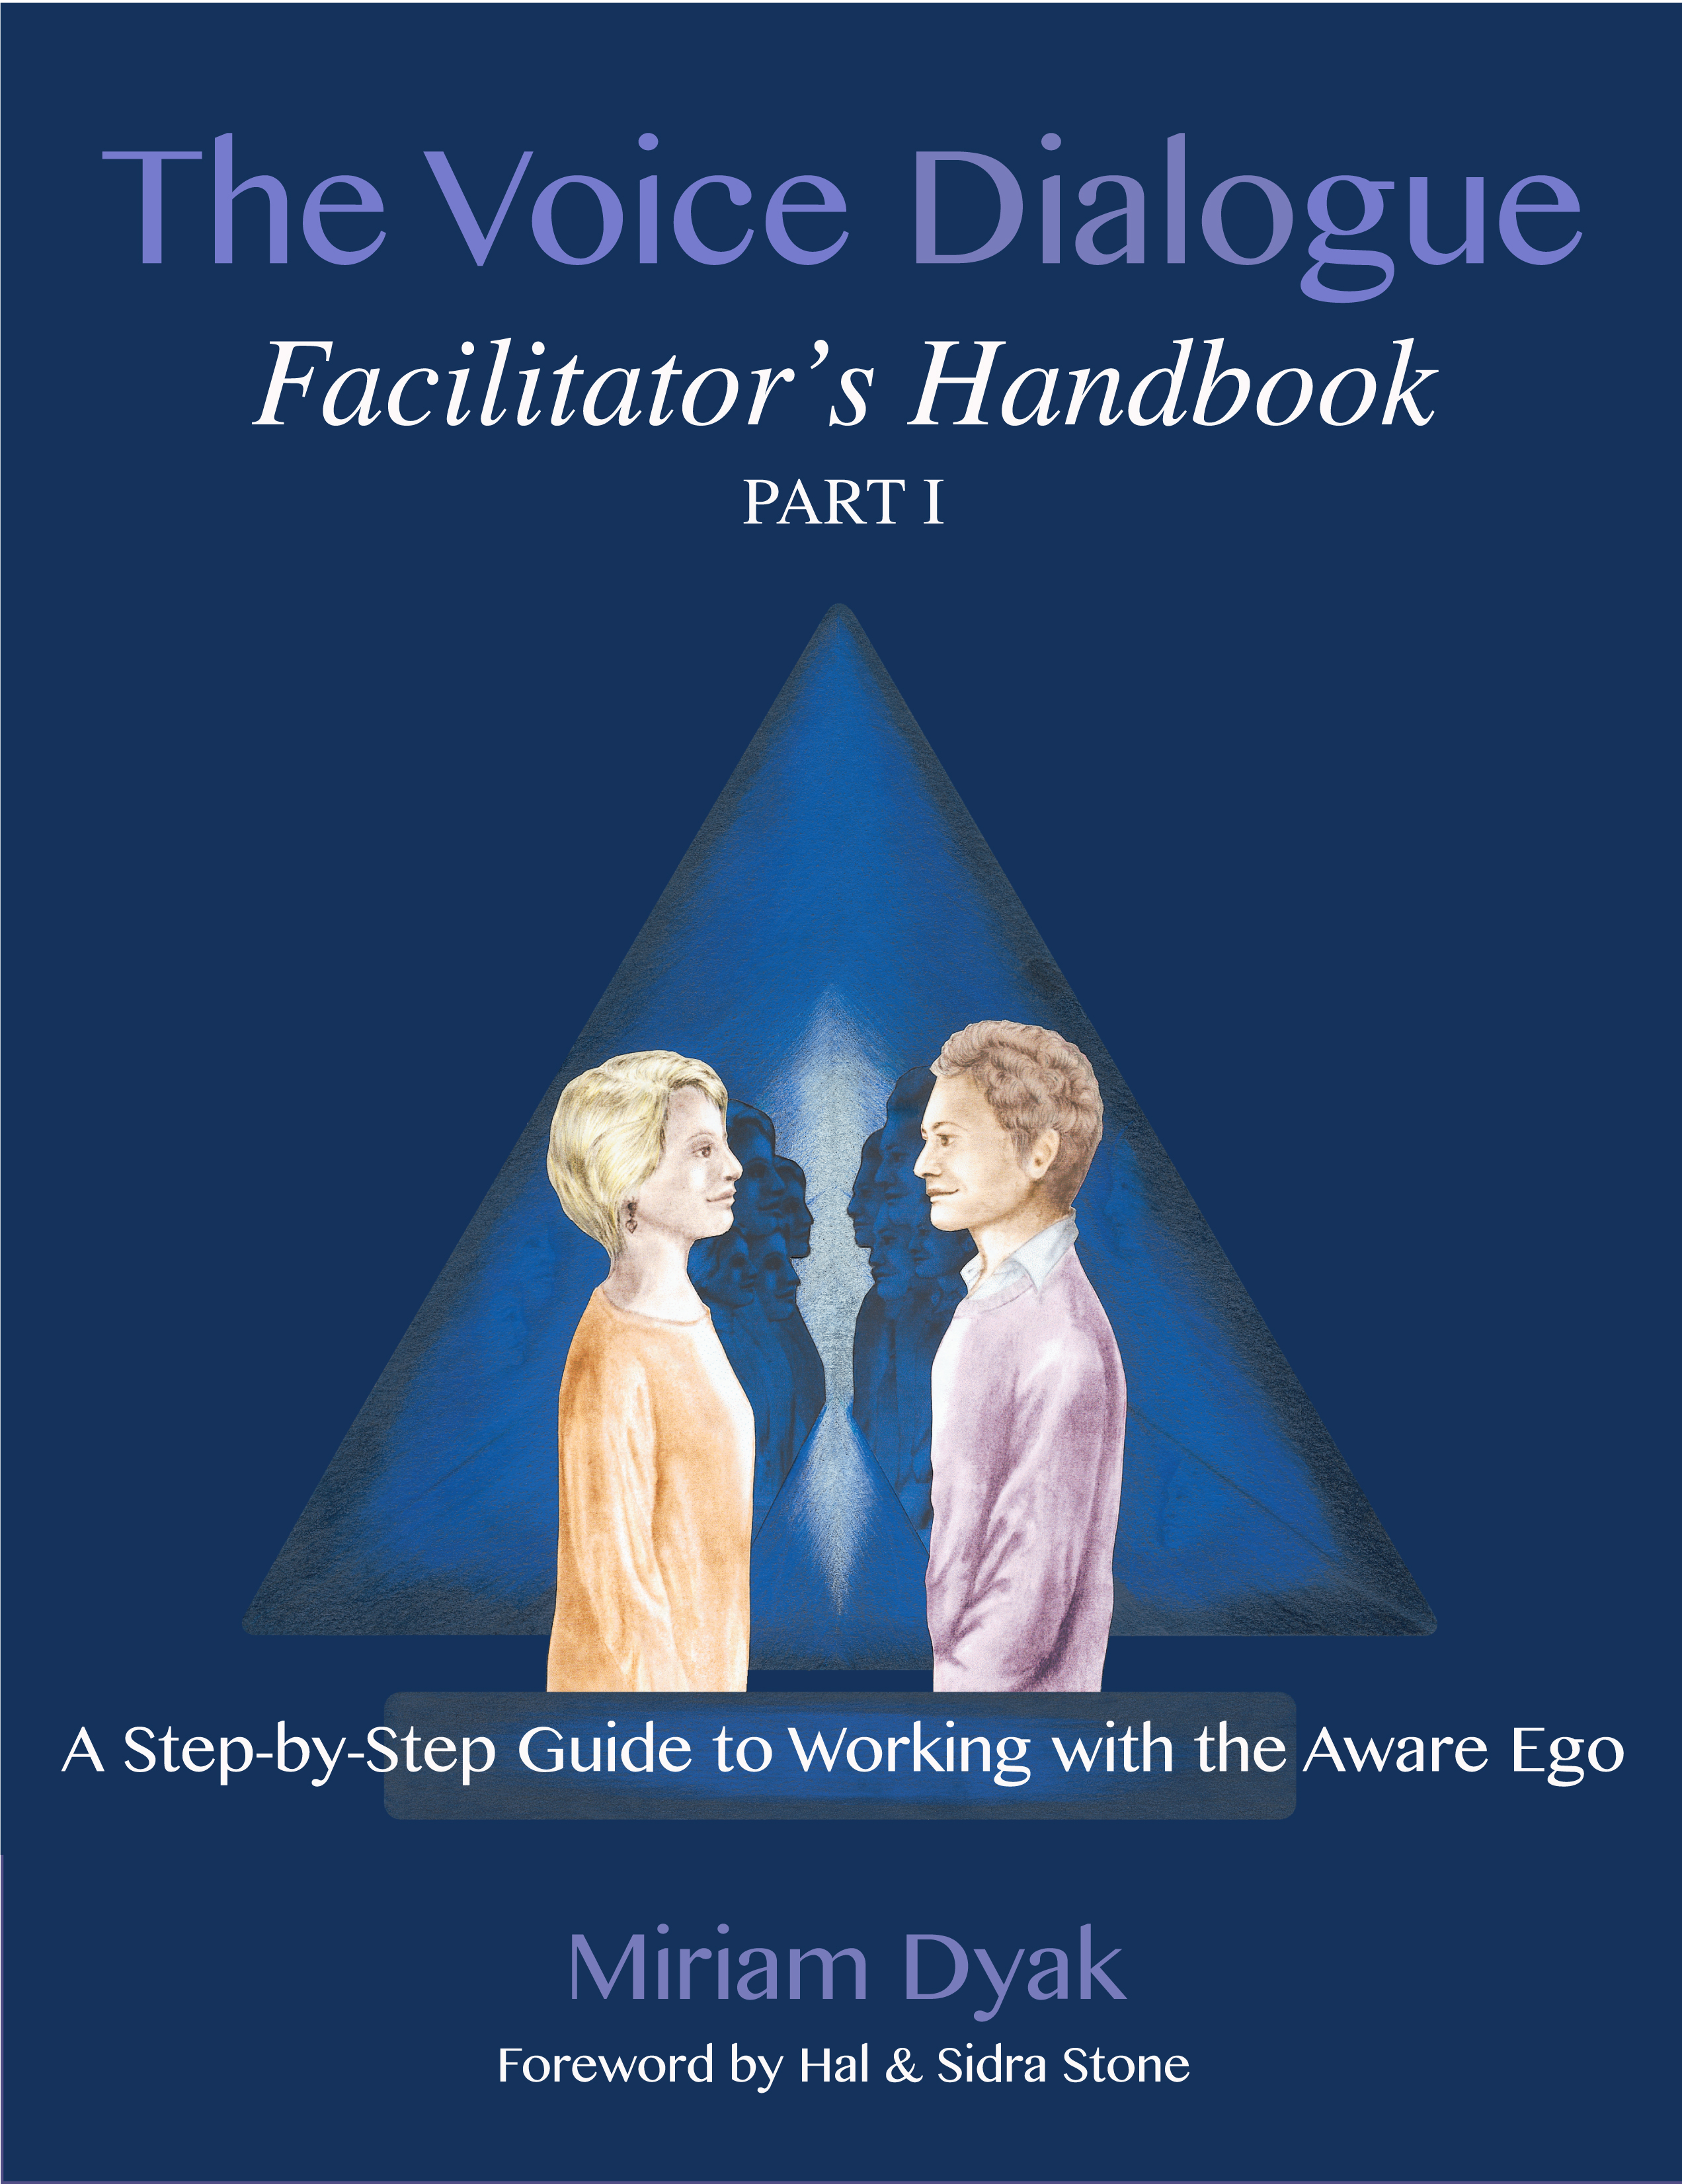 The Voice Dialogue Facilitator's Handbook, Part 1